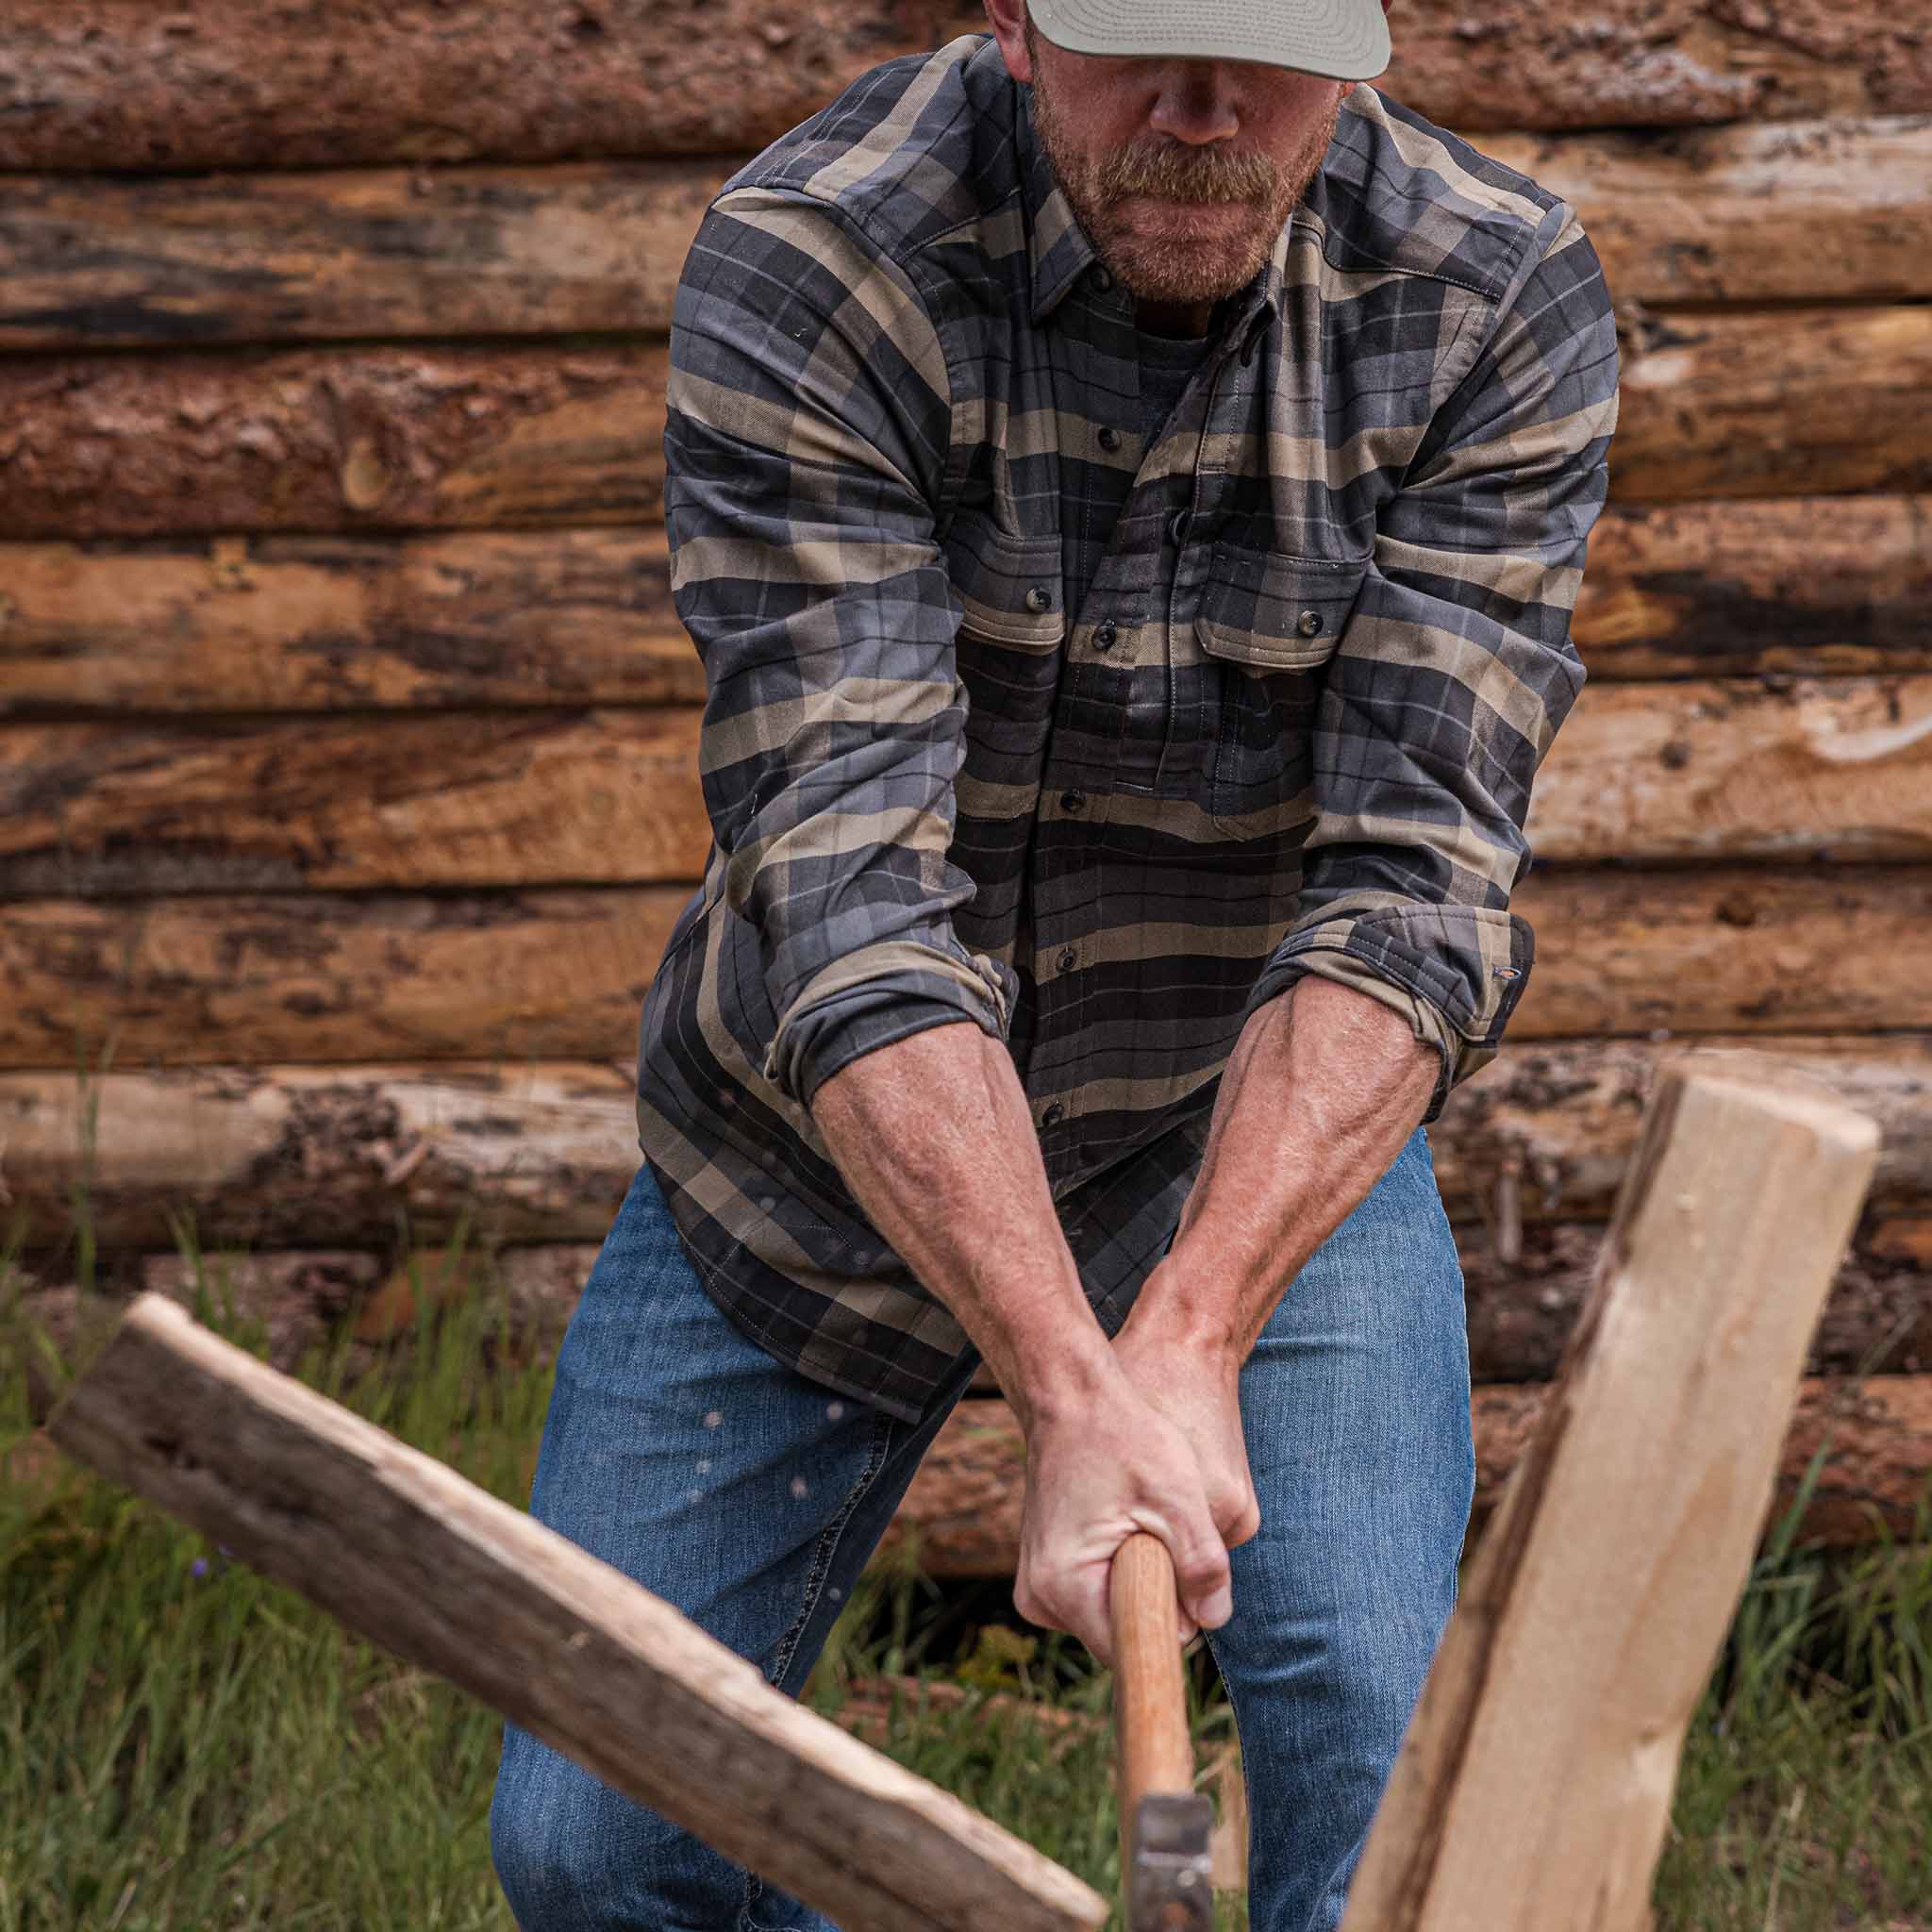 guy wearing flannel chopping wood